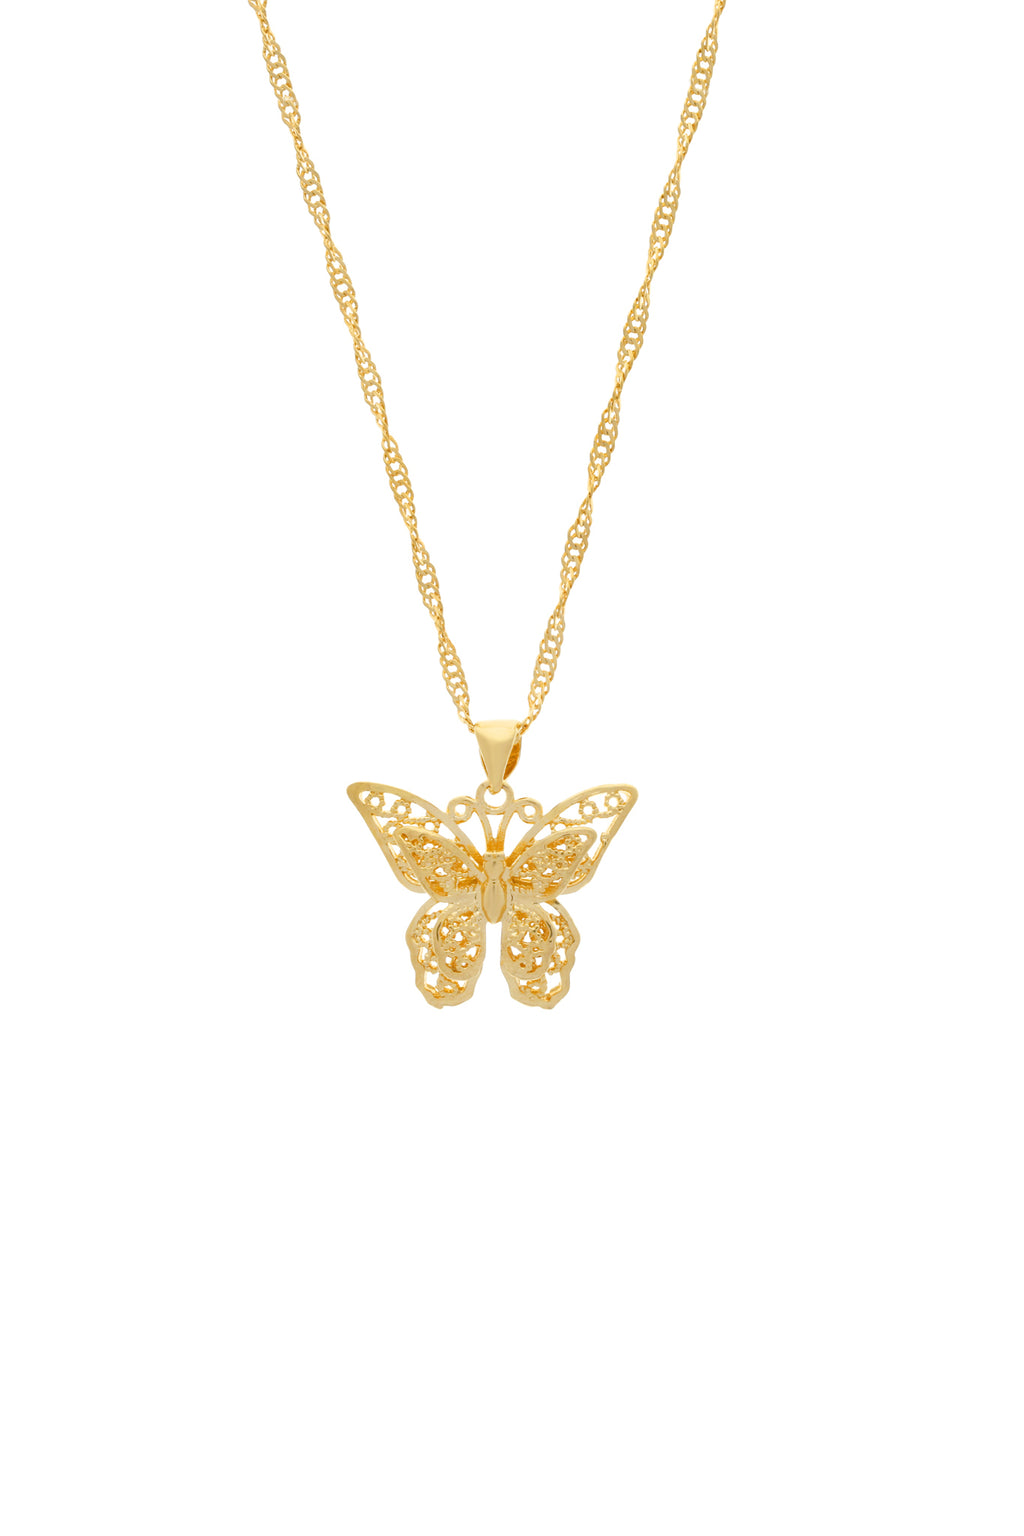 Pipa Bella by Nykaa Fashion Three Layered Butterfly Pendant Gold Plate –  www.pipabella.com